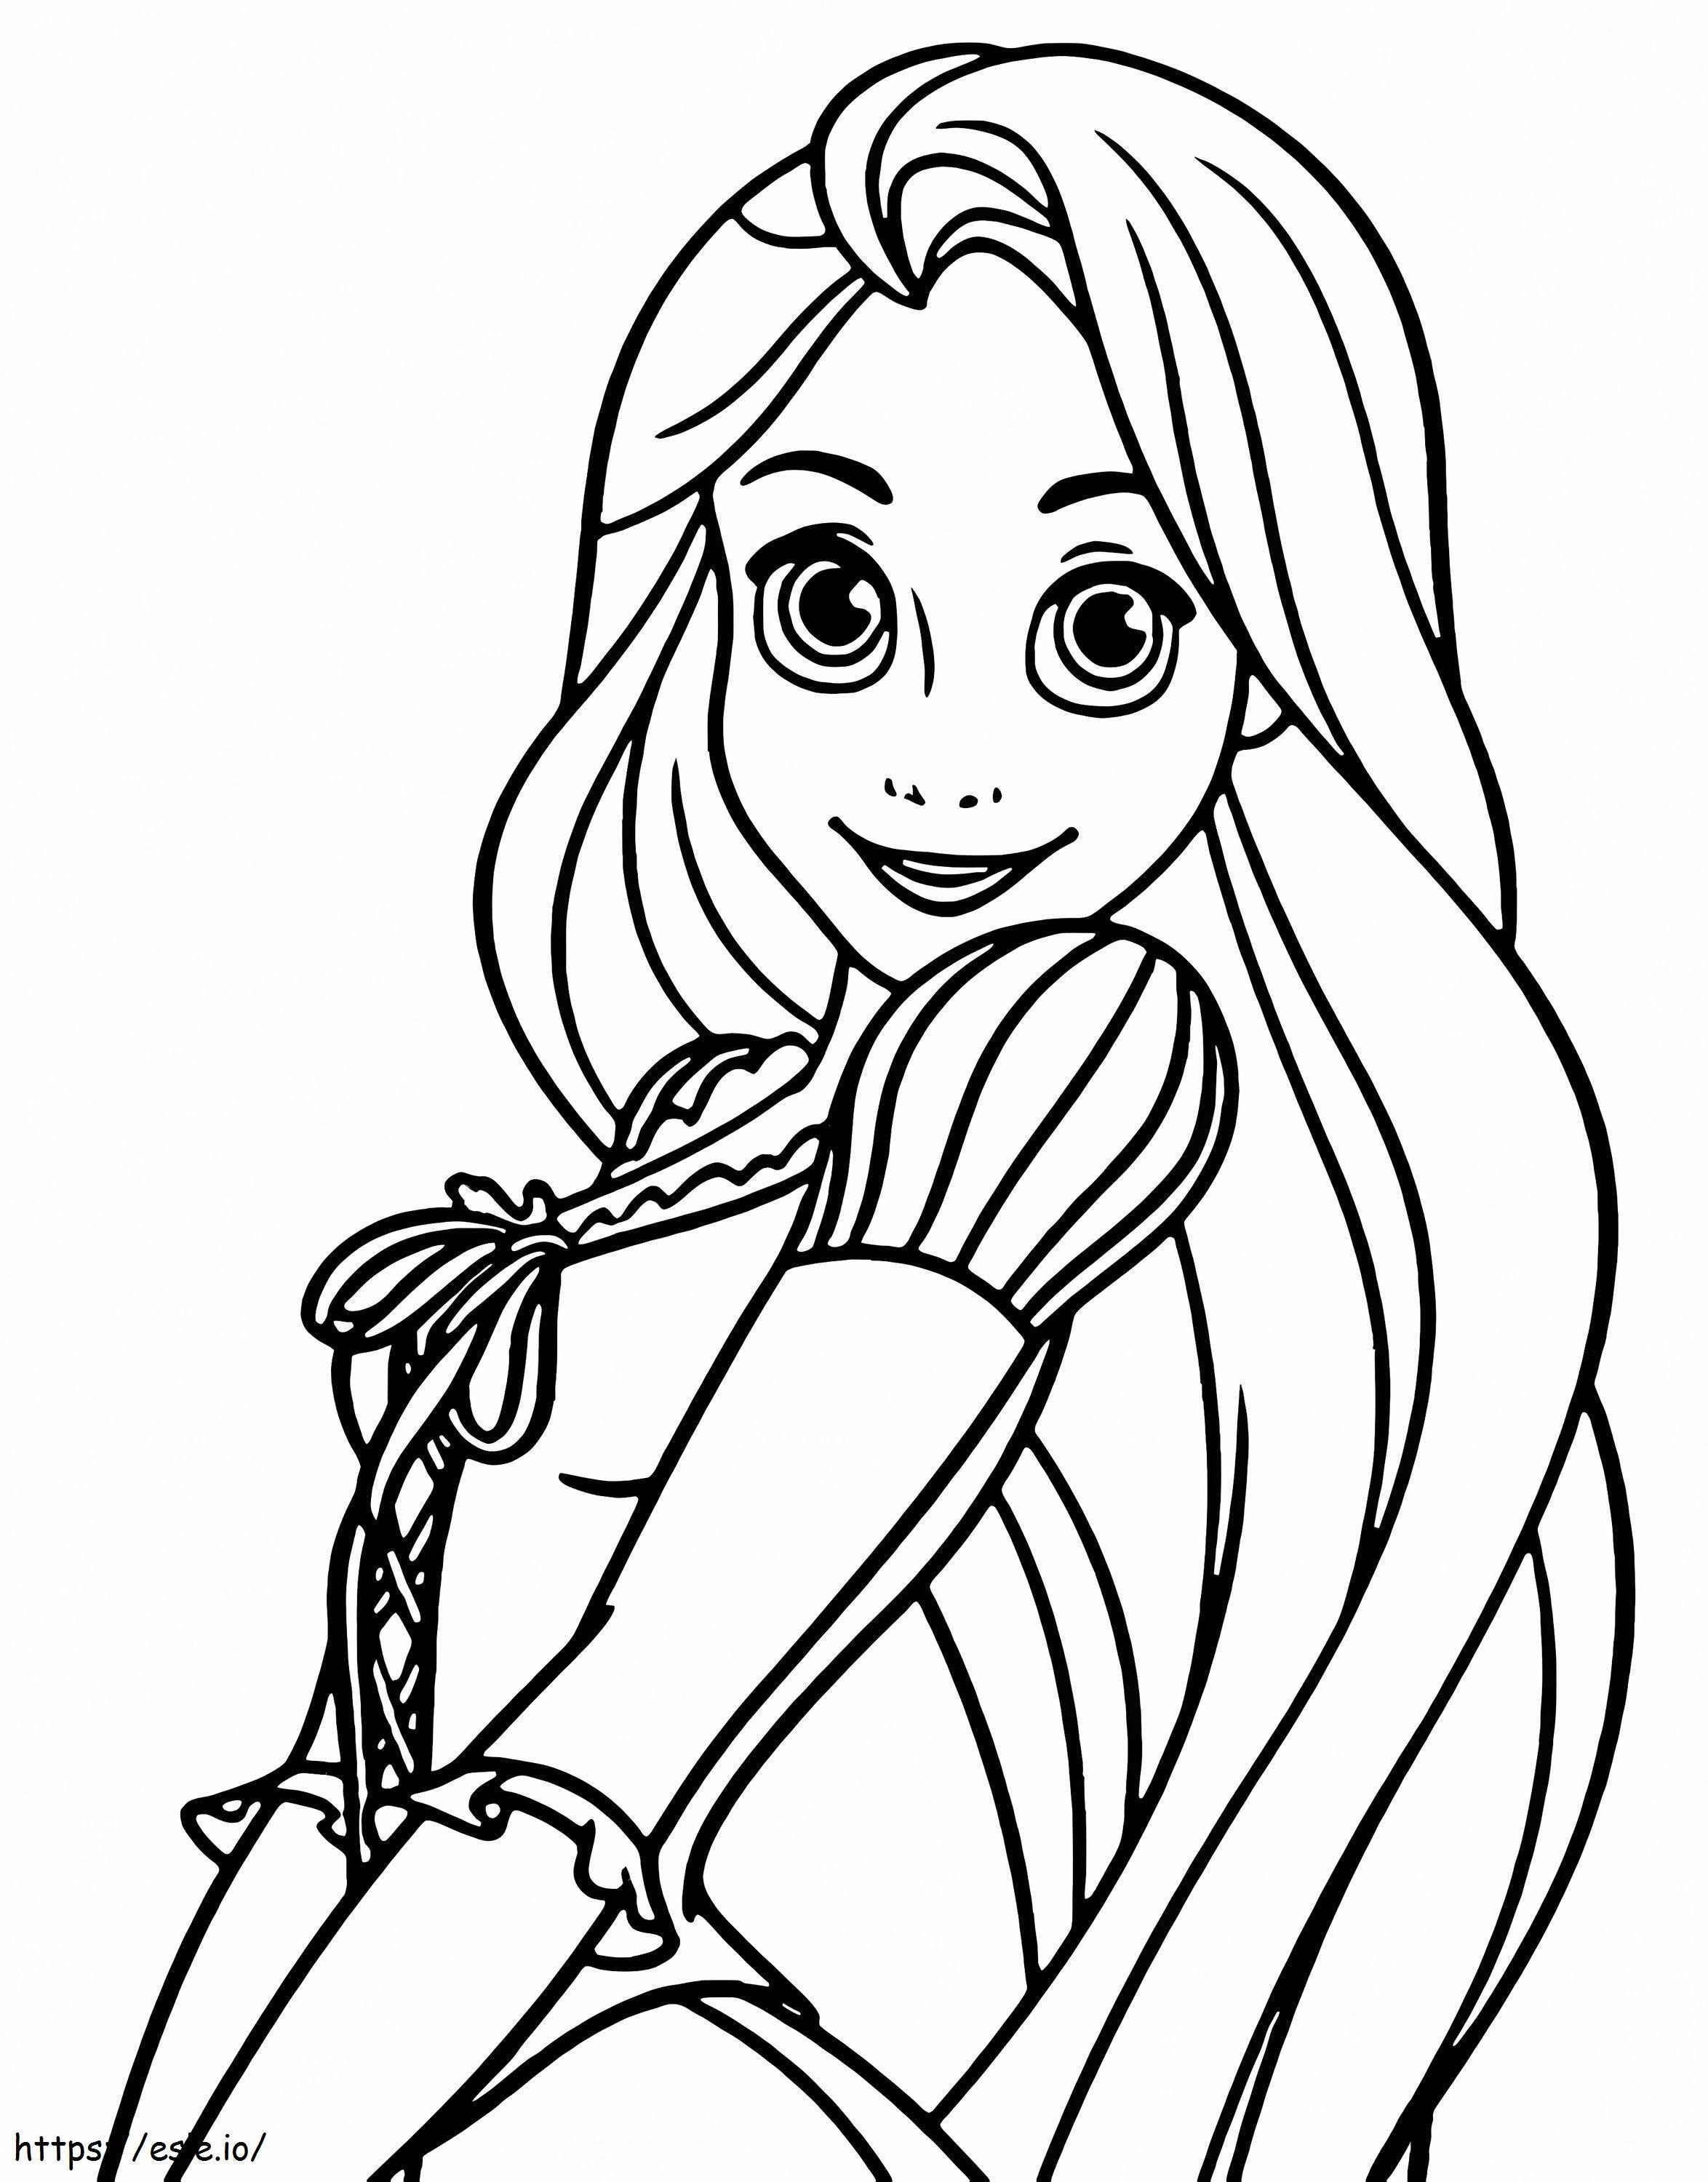 La bellissima principessa Rapunzel 2 da colorare